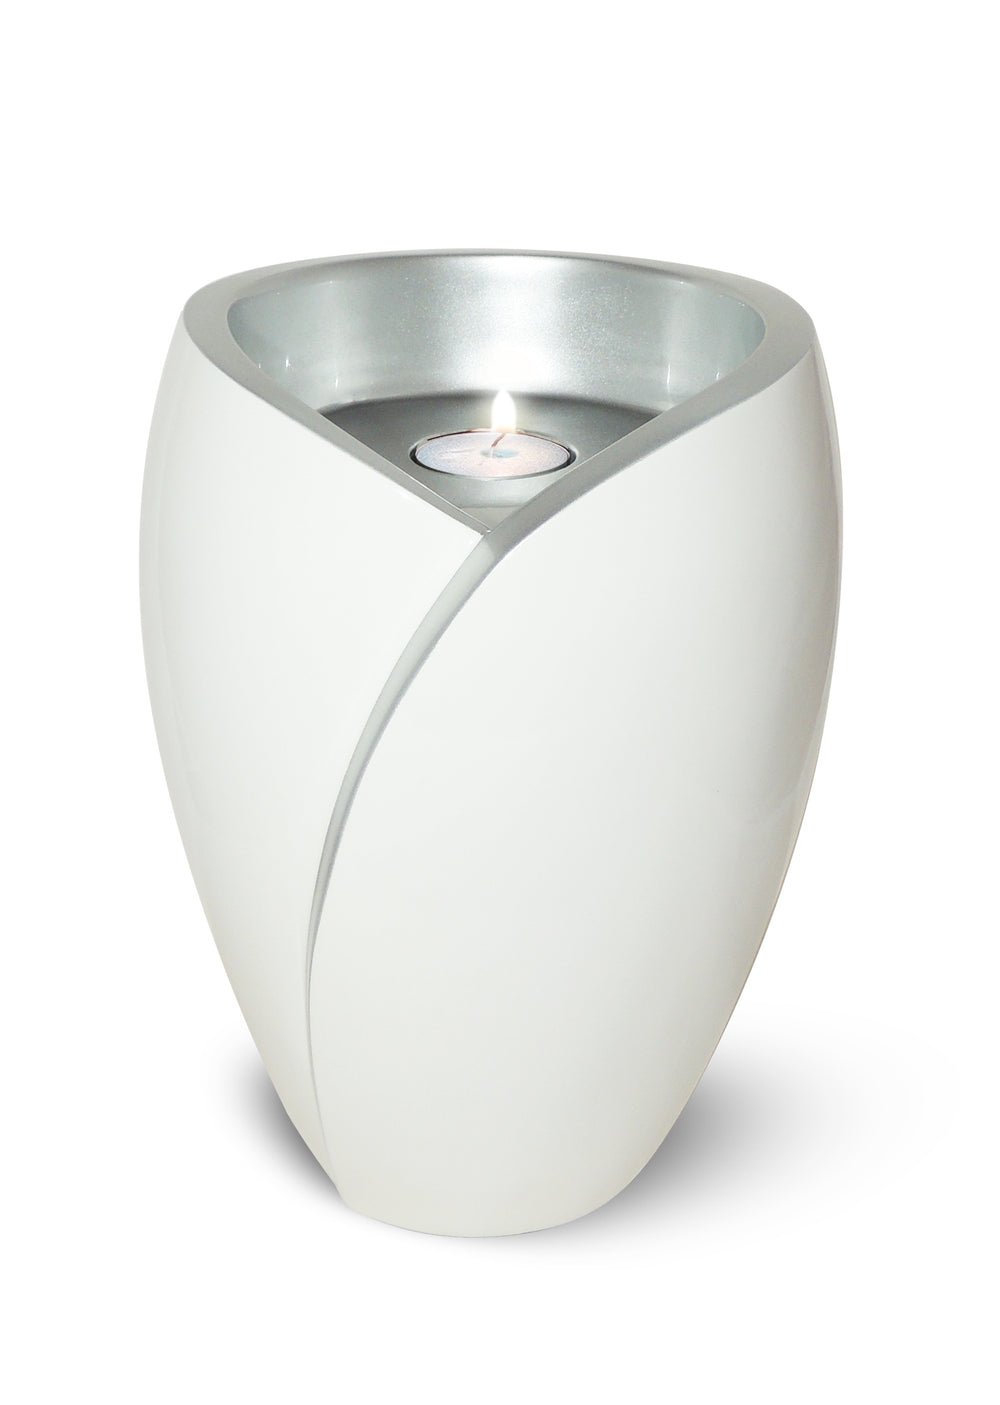 Aesthetic Series - Tealight Adult Fiberglass Urn, White - IUFC103